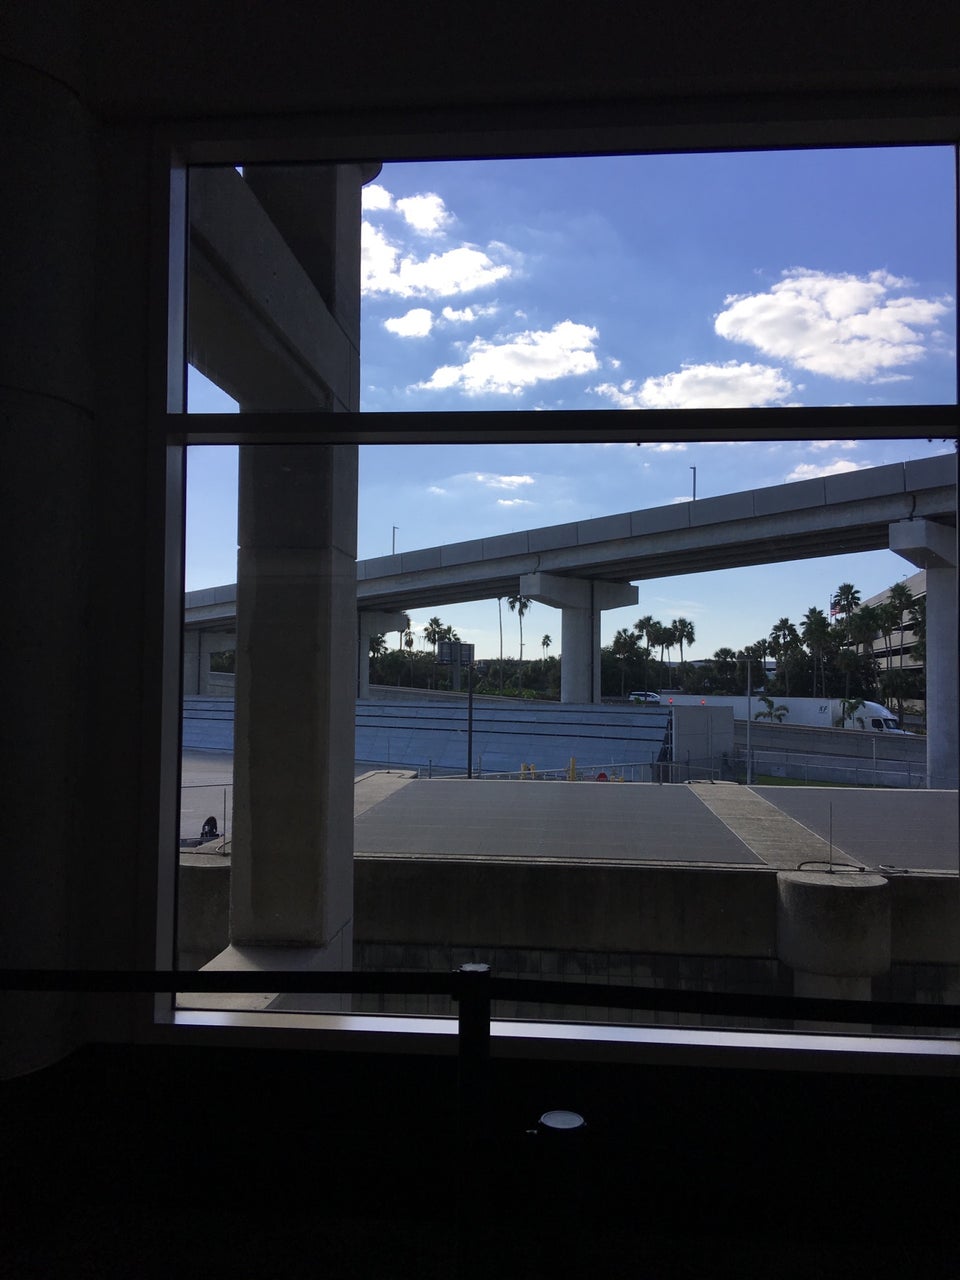 Photo of Tampa International Airport